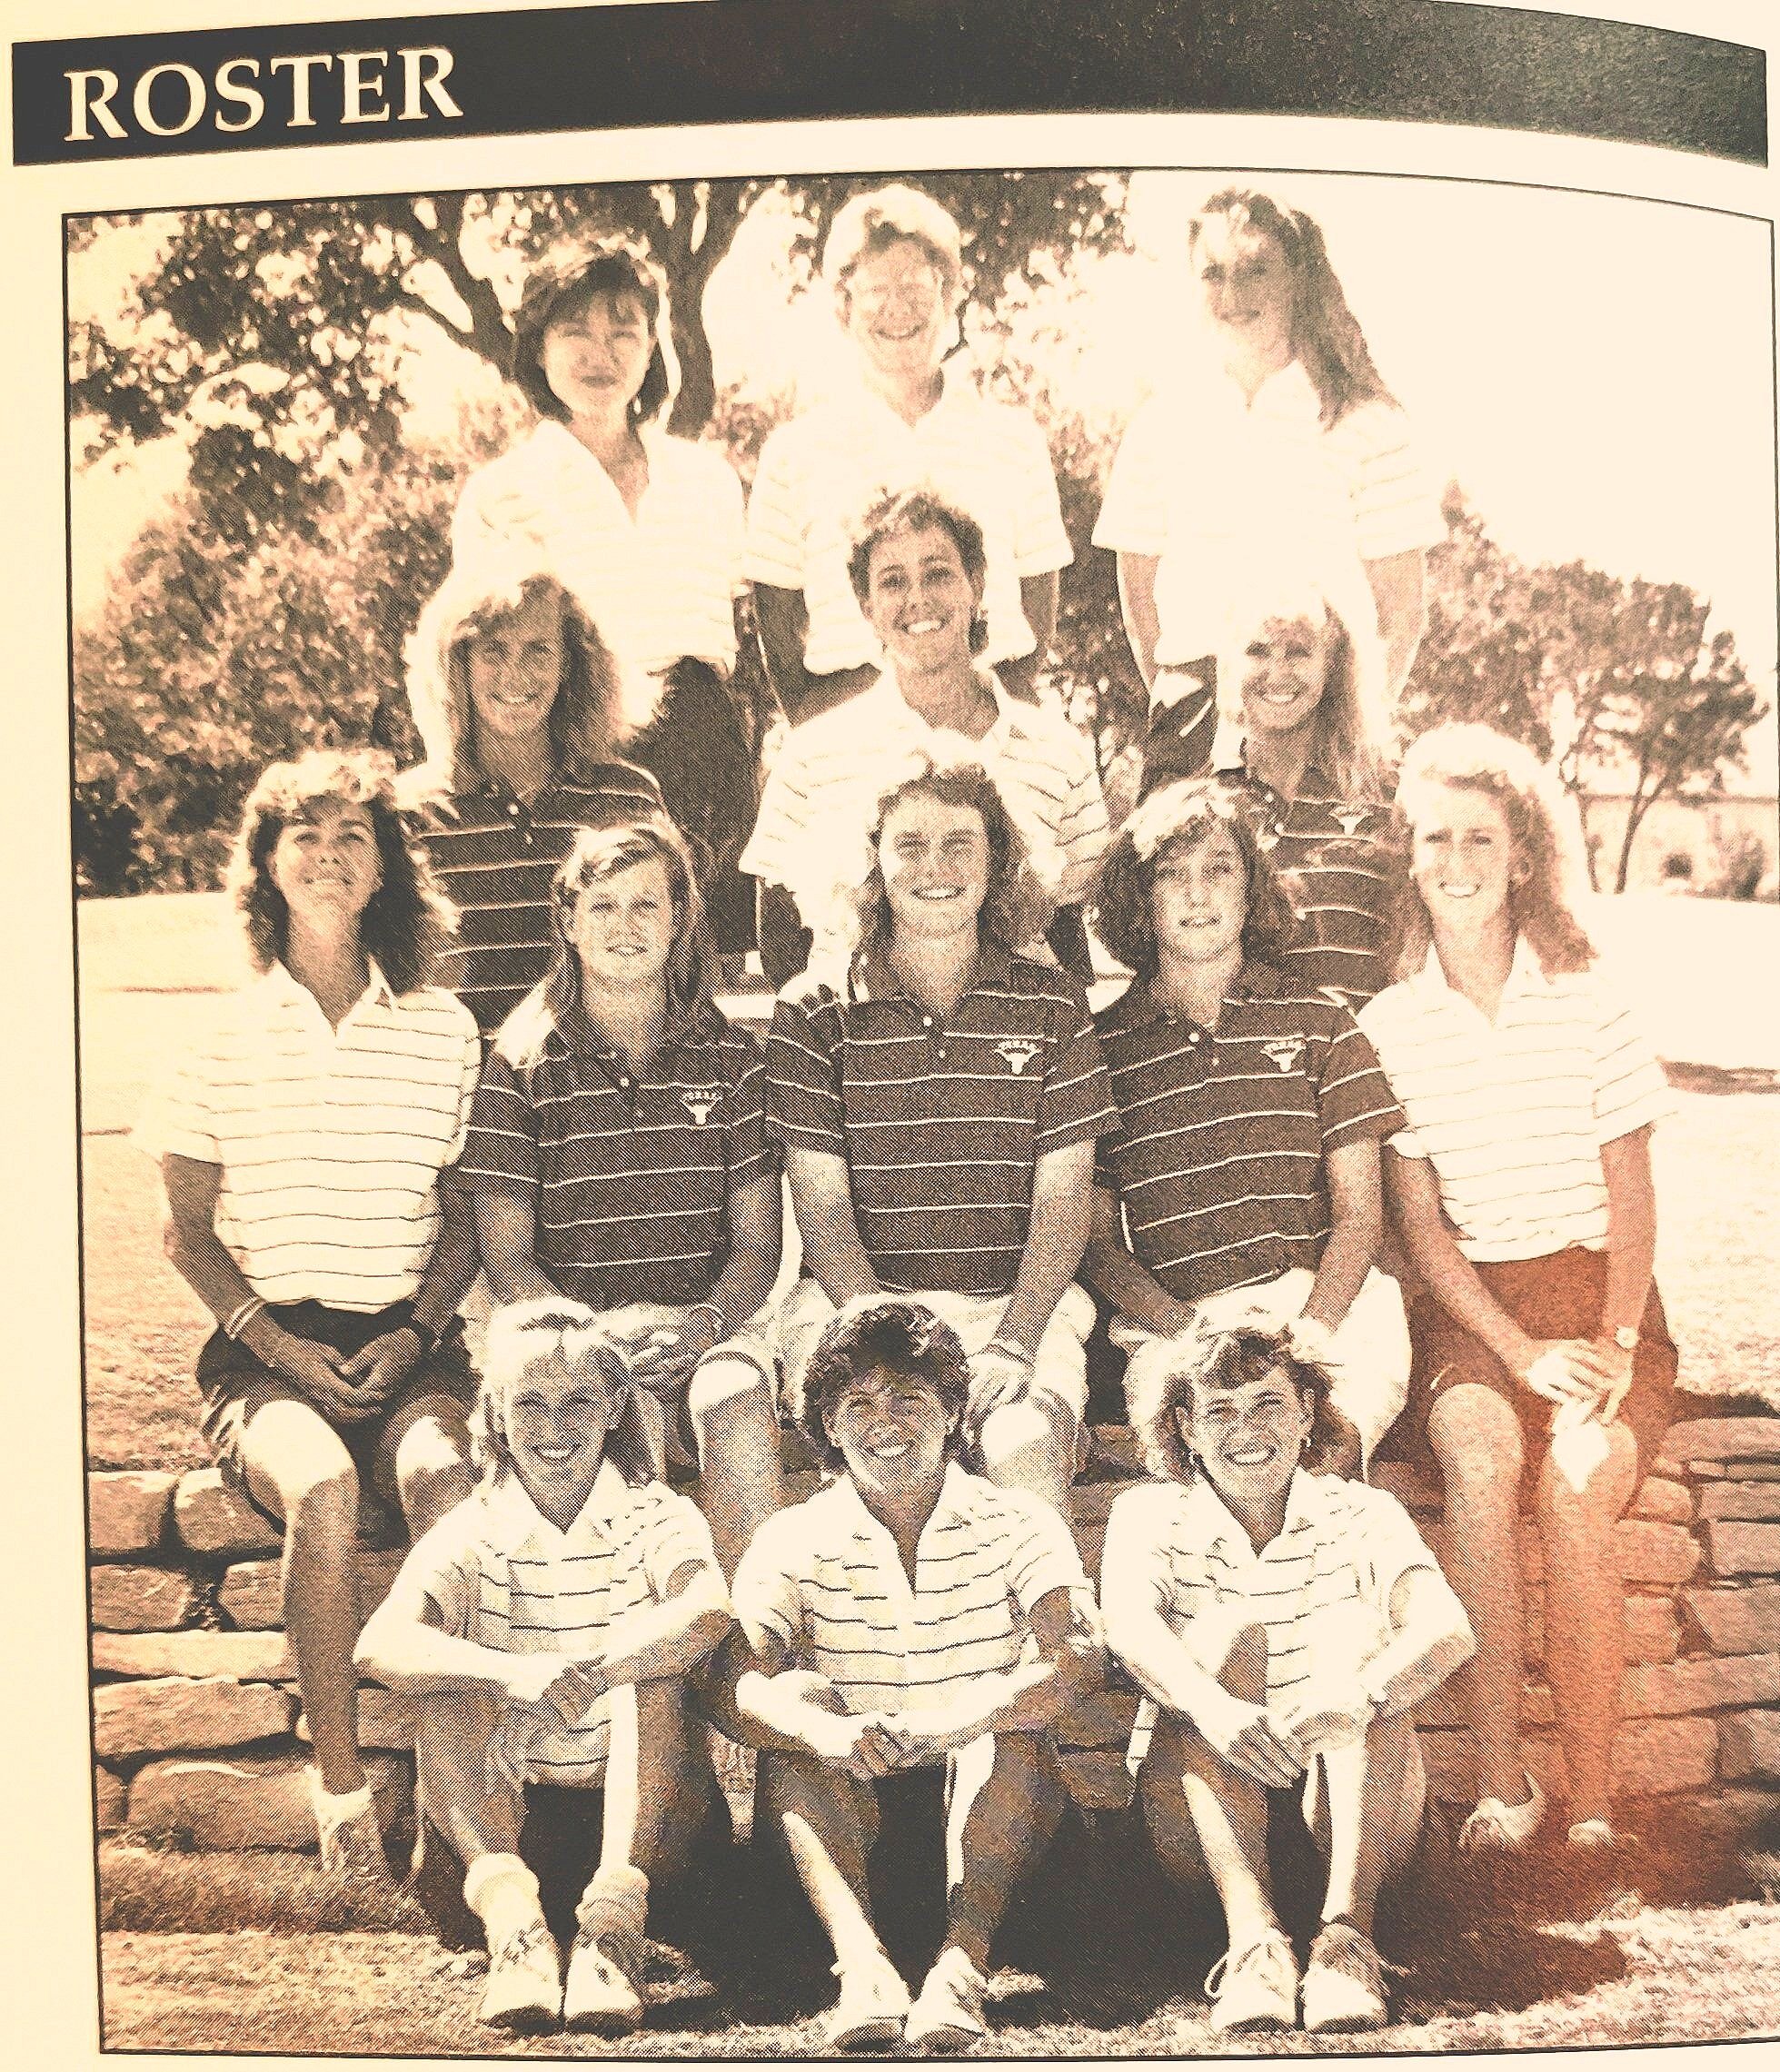  1990 women's golf  front Rinke, Haley, Fischer second Germs Burke, Anderson Mayhew, Hannafin, third Turner Wagner, Spangler manager, back Hattori, Weis Stott. 